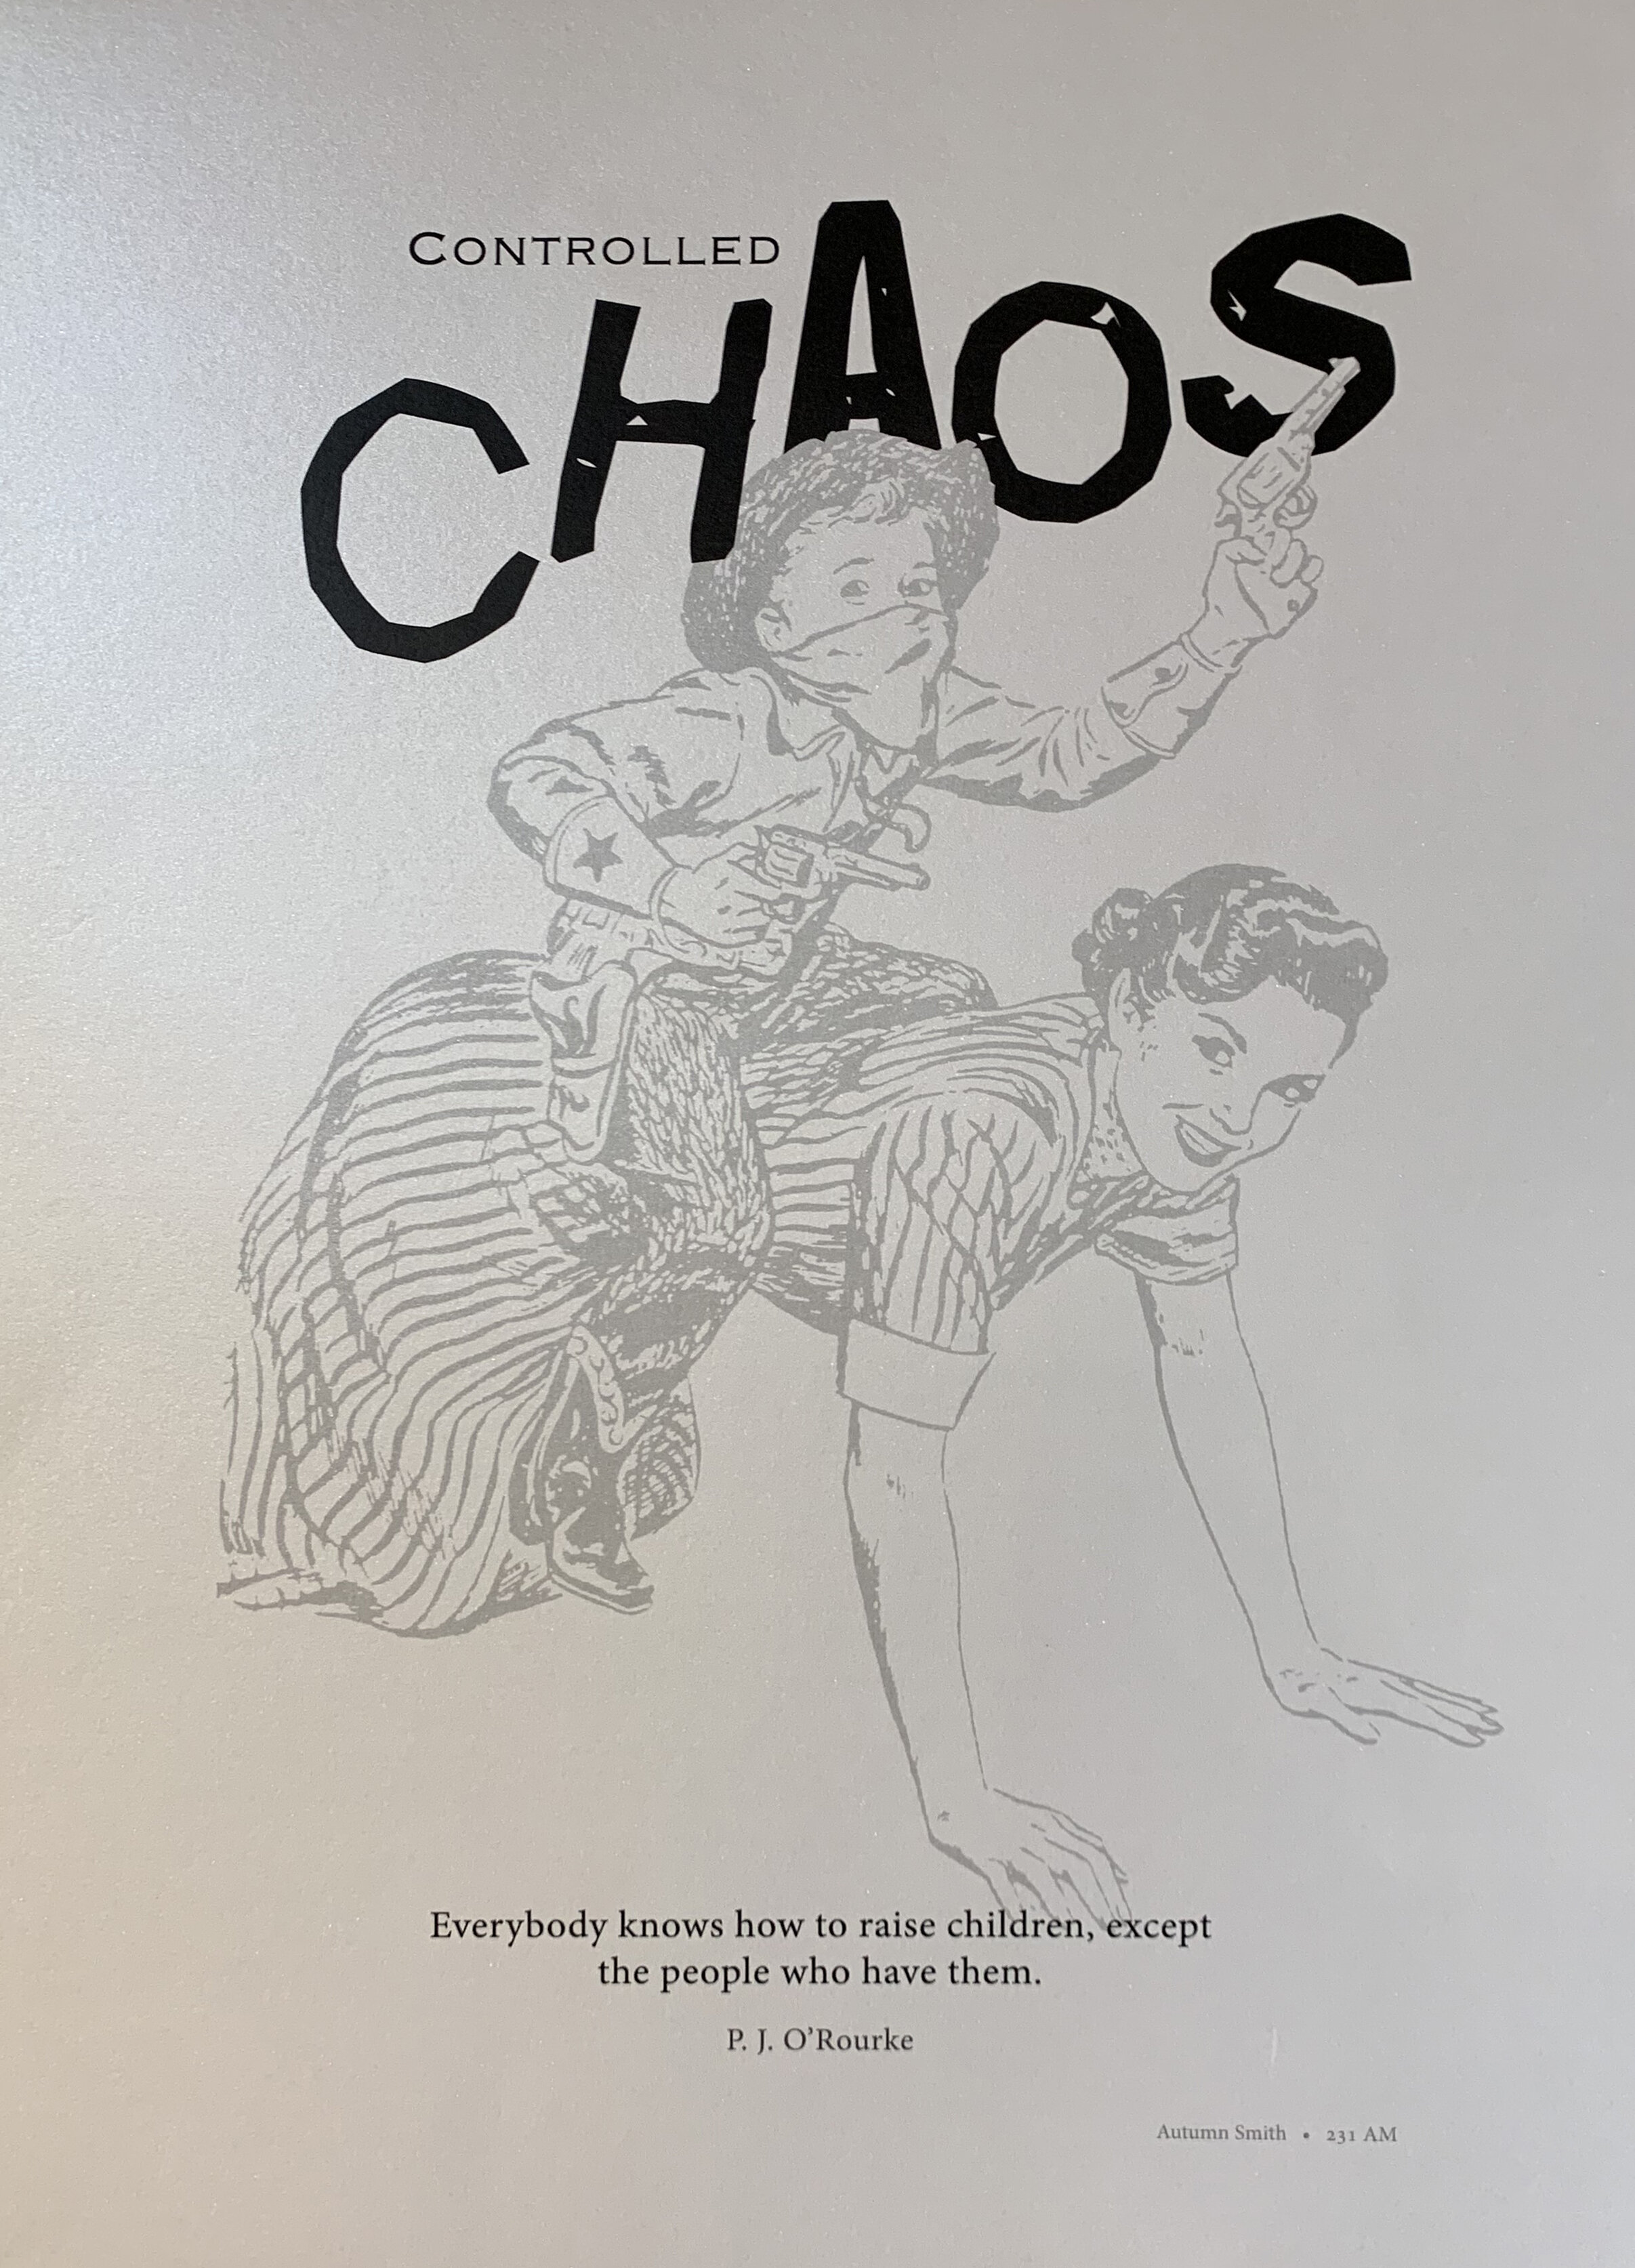 Autumn Smith, "Controlled Chaos"